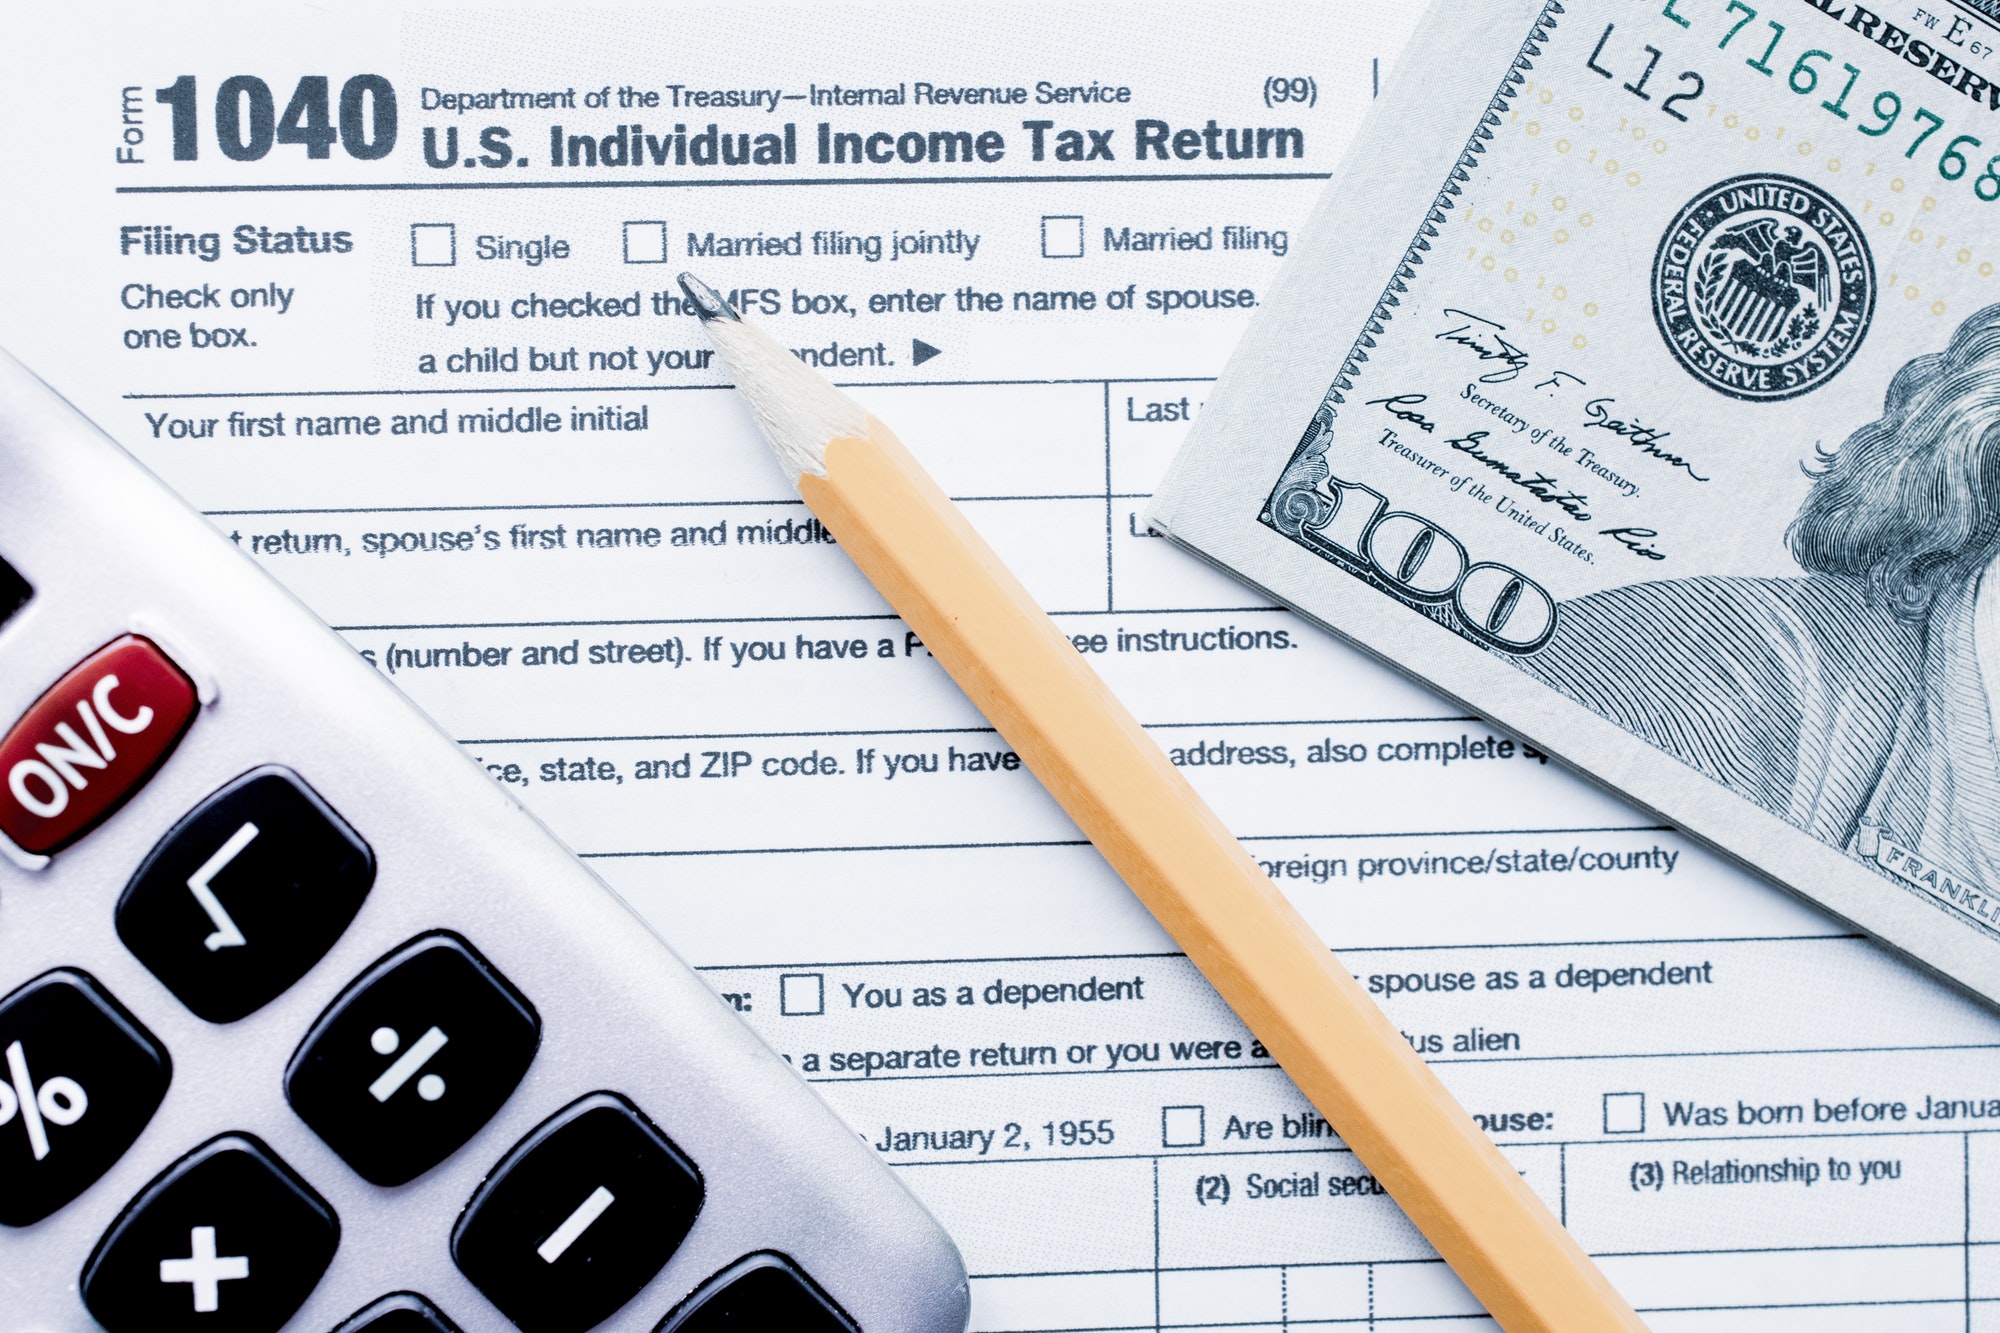 U.S. Individual Income Tax Return with a calcultator, cash money $100 dollar bills with a pencil